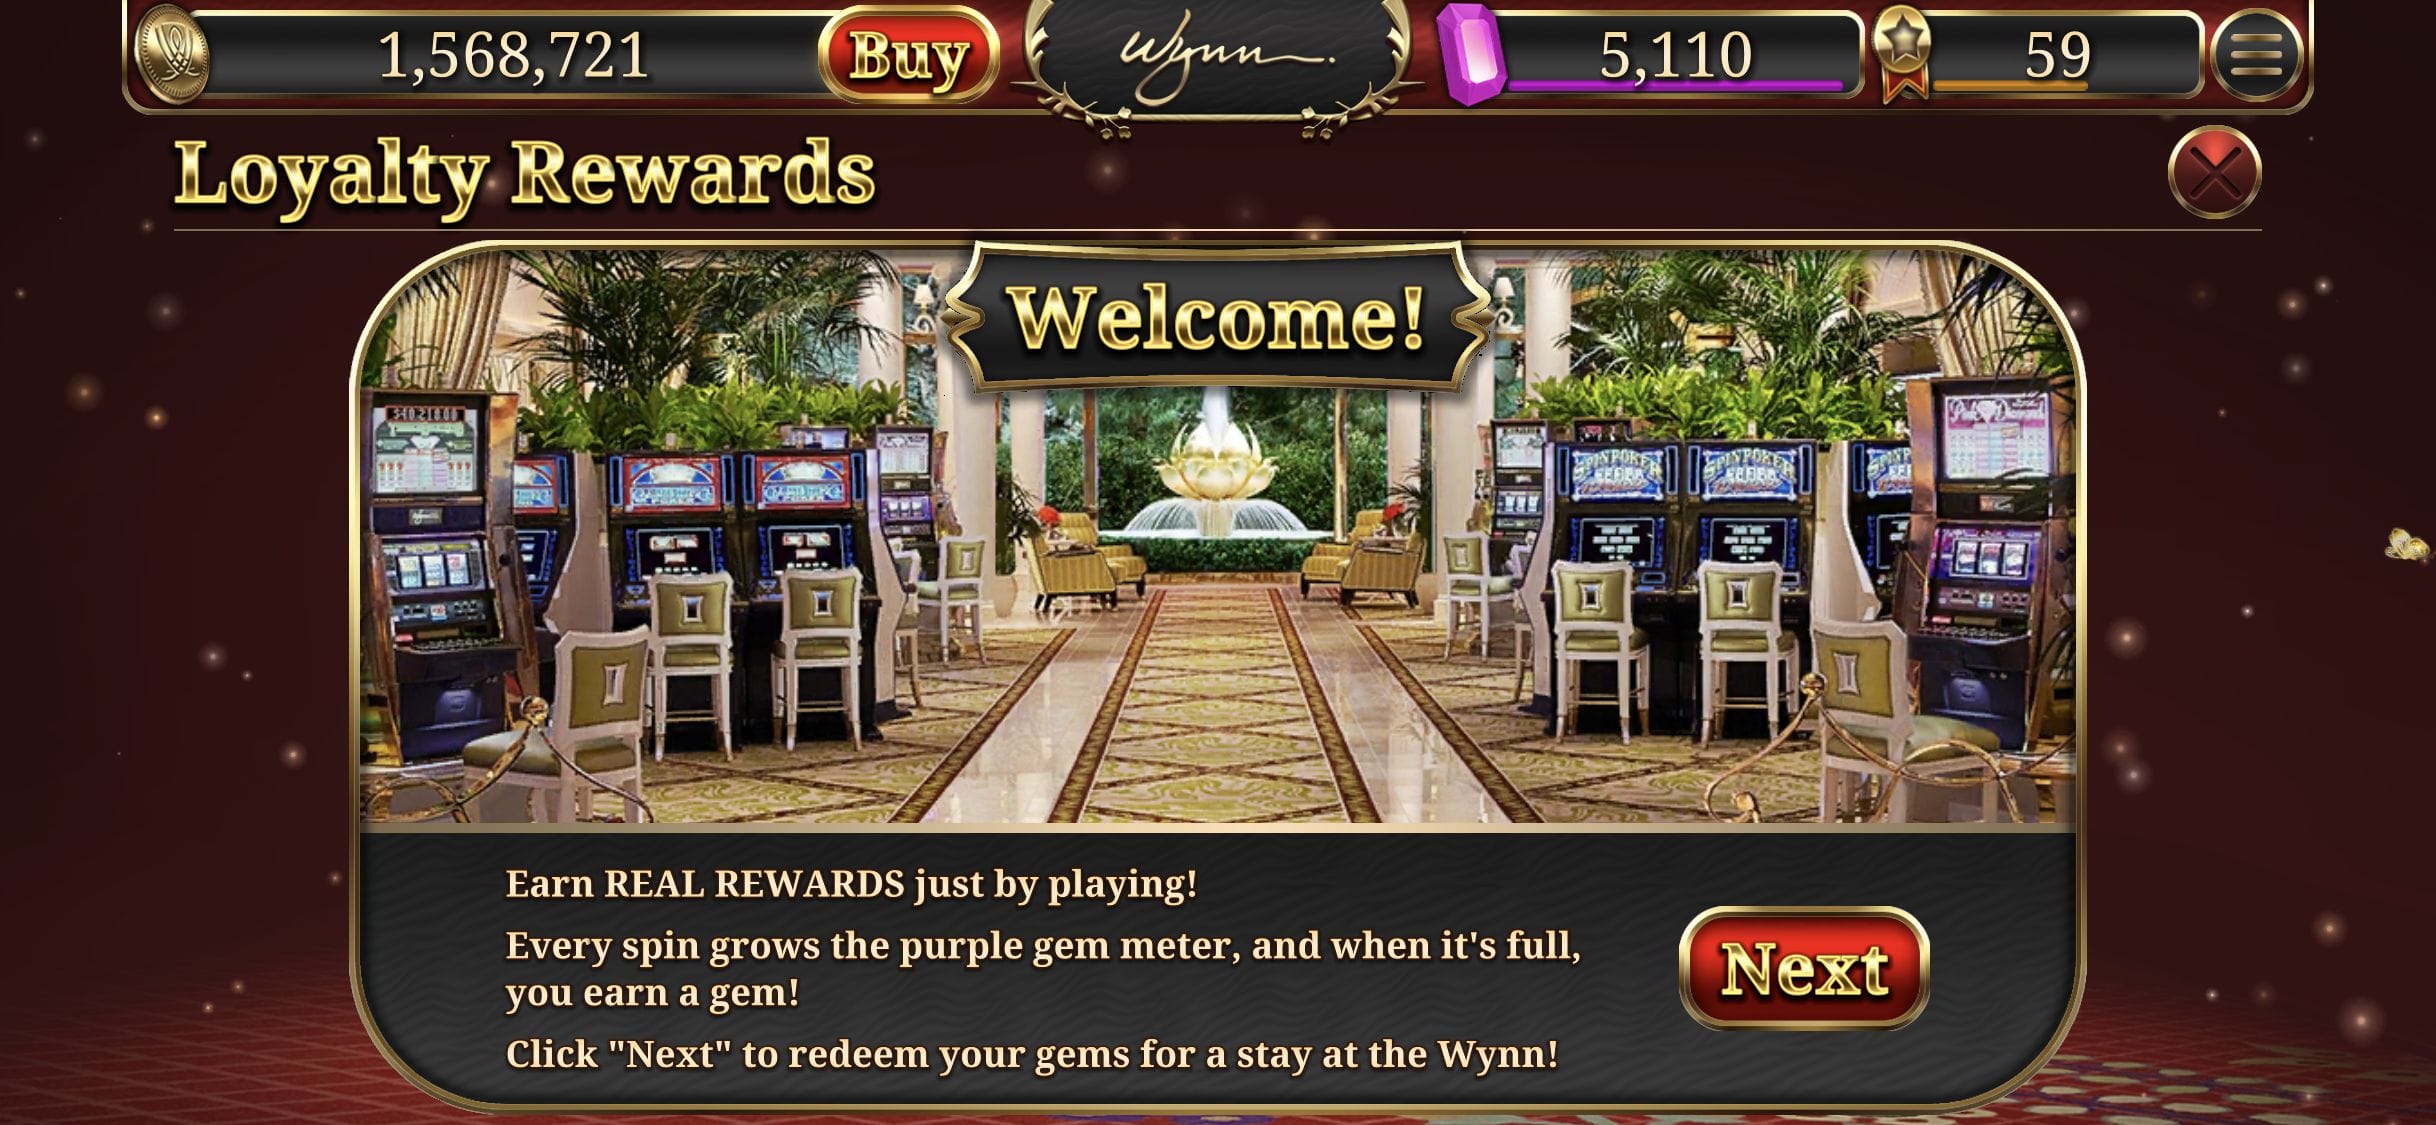 Raging Bull No Deposit Free Spins | Free Online Slot Machine Casino